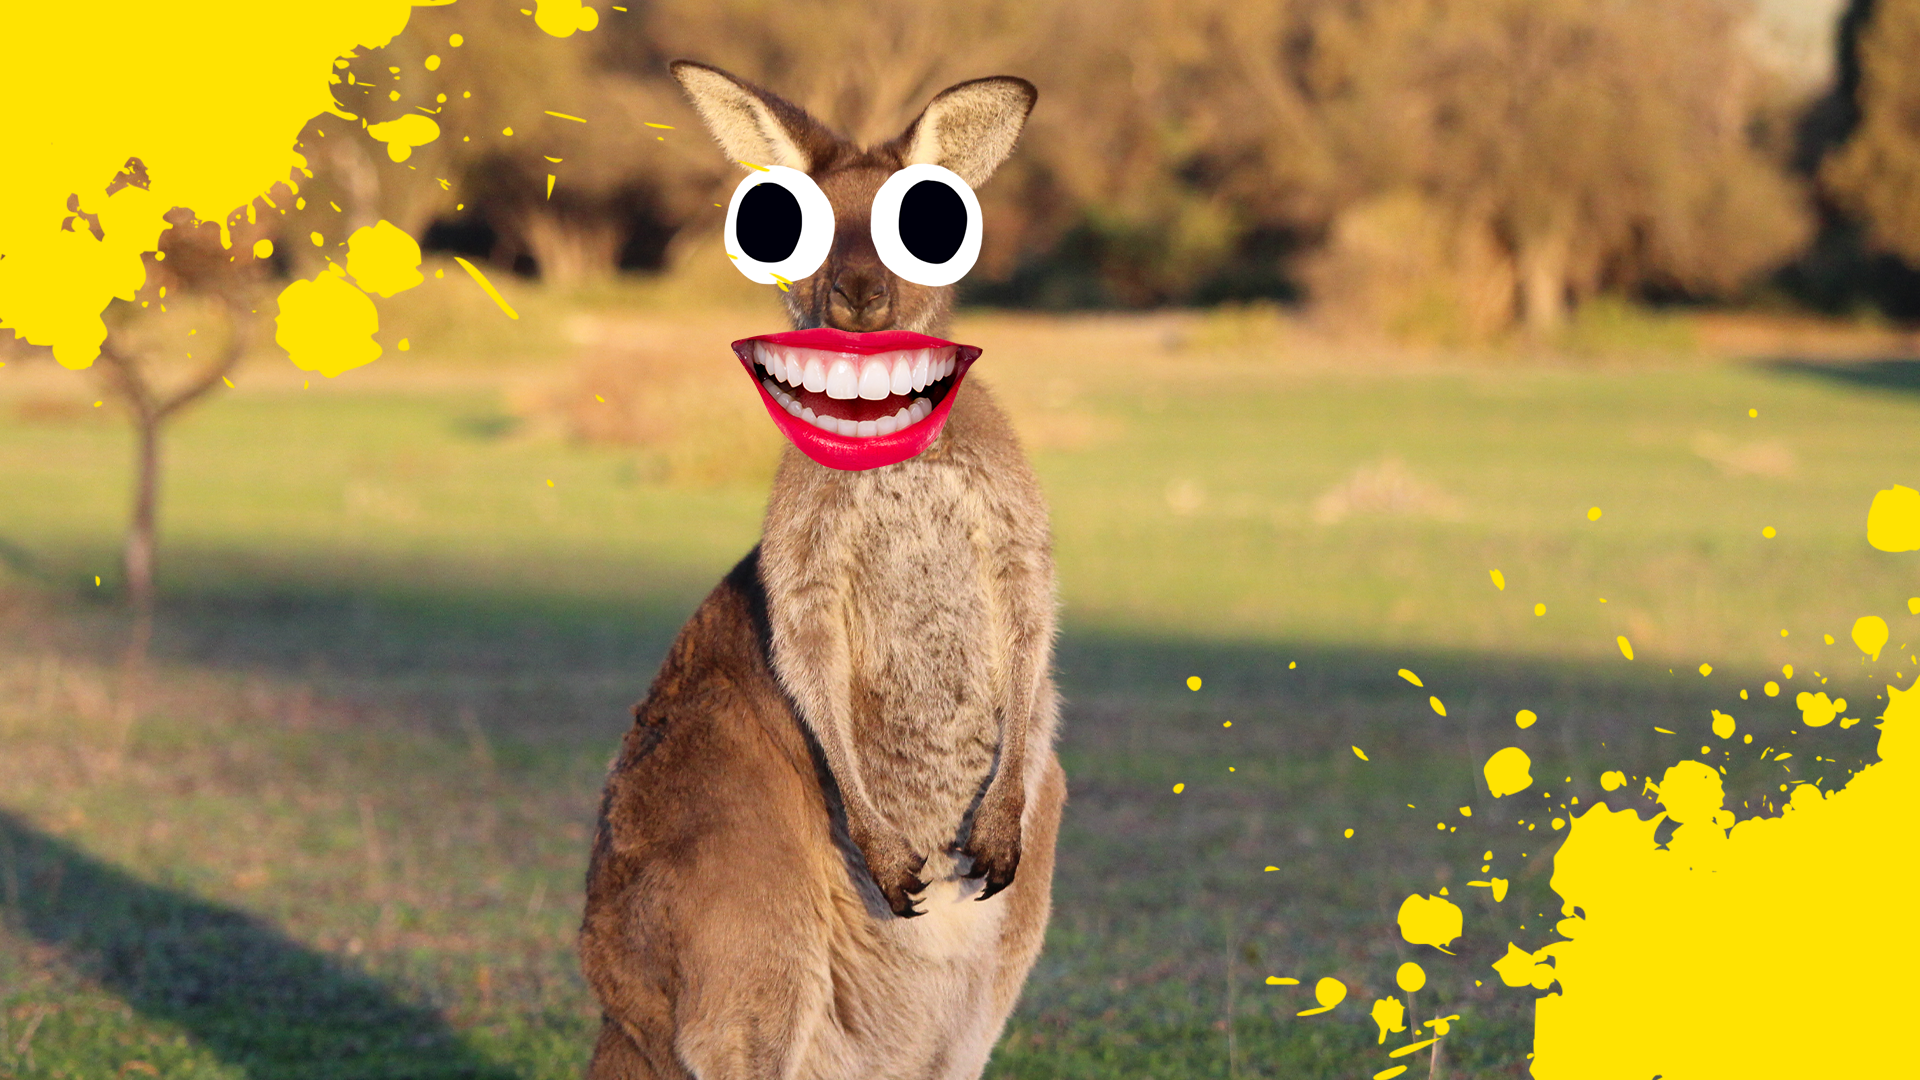 Goofy kangaroo with splats